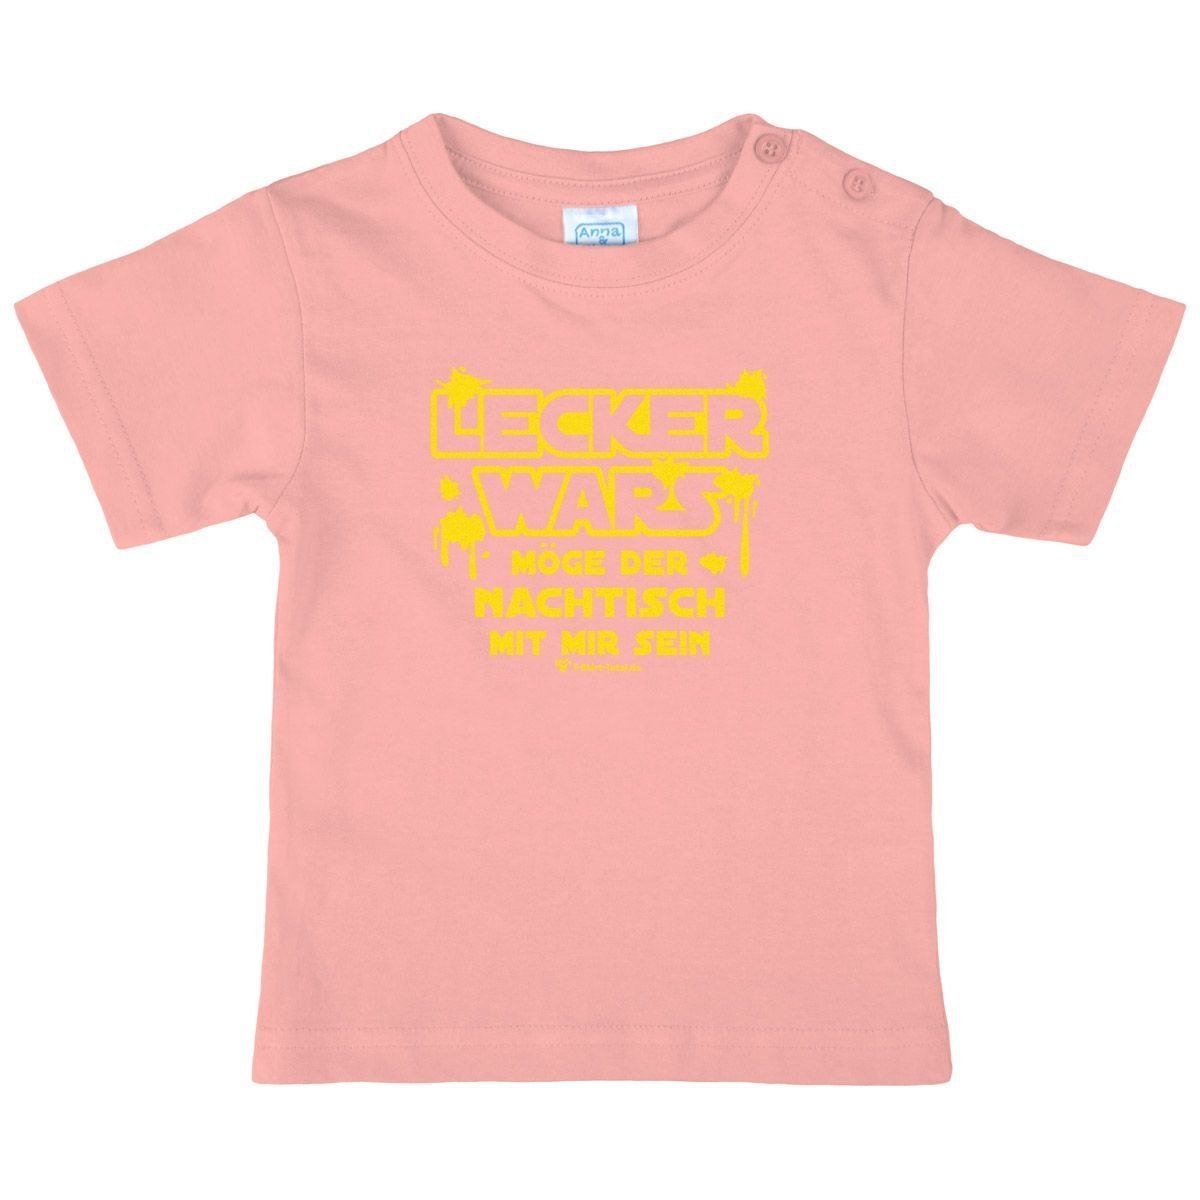 Lecker wars Kinder T-Shirt rosa 68 / 74